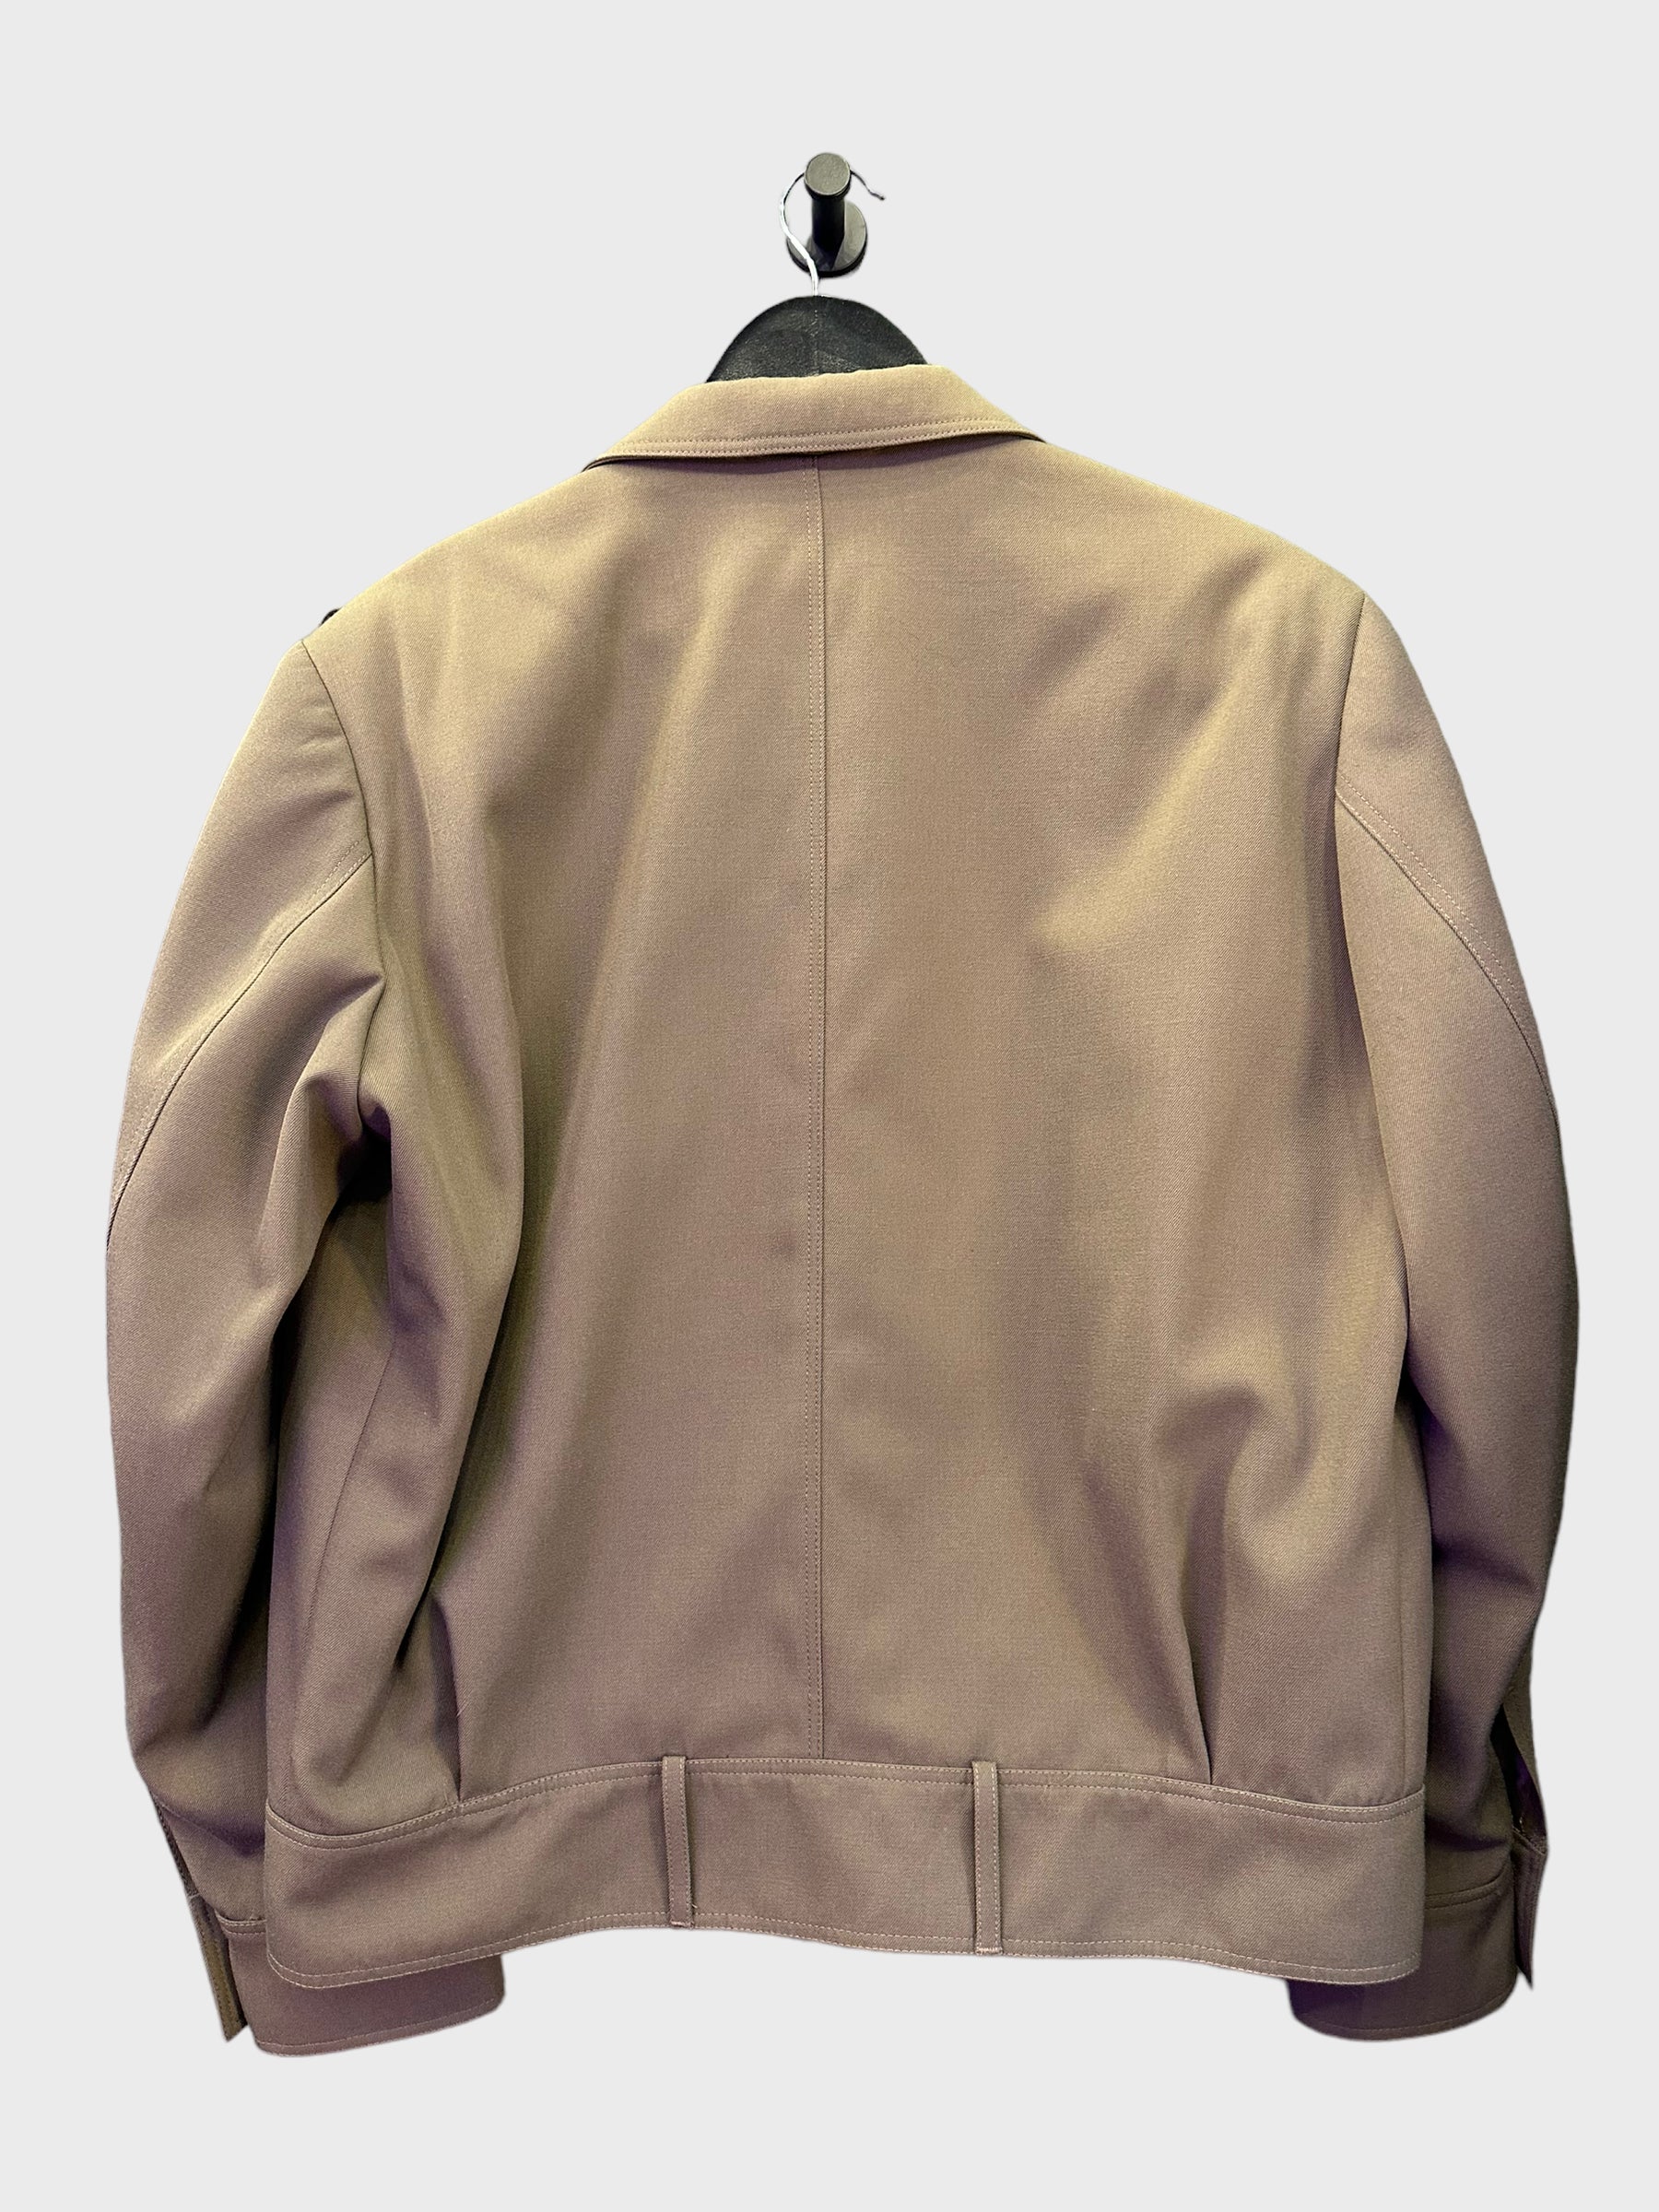 Vintage Twill blazer jacket